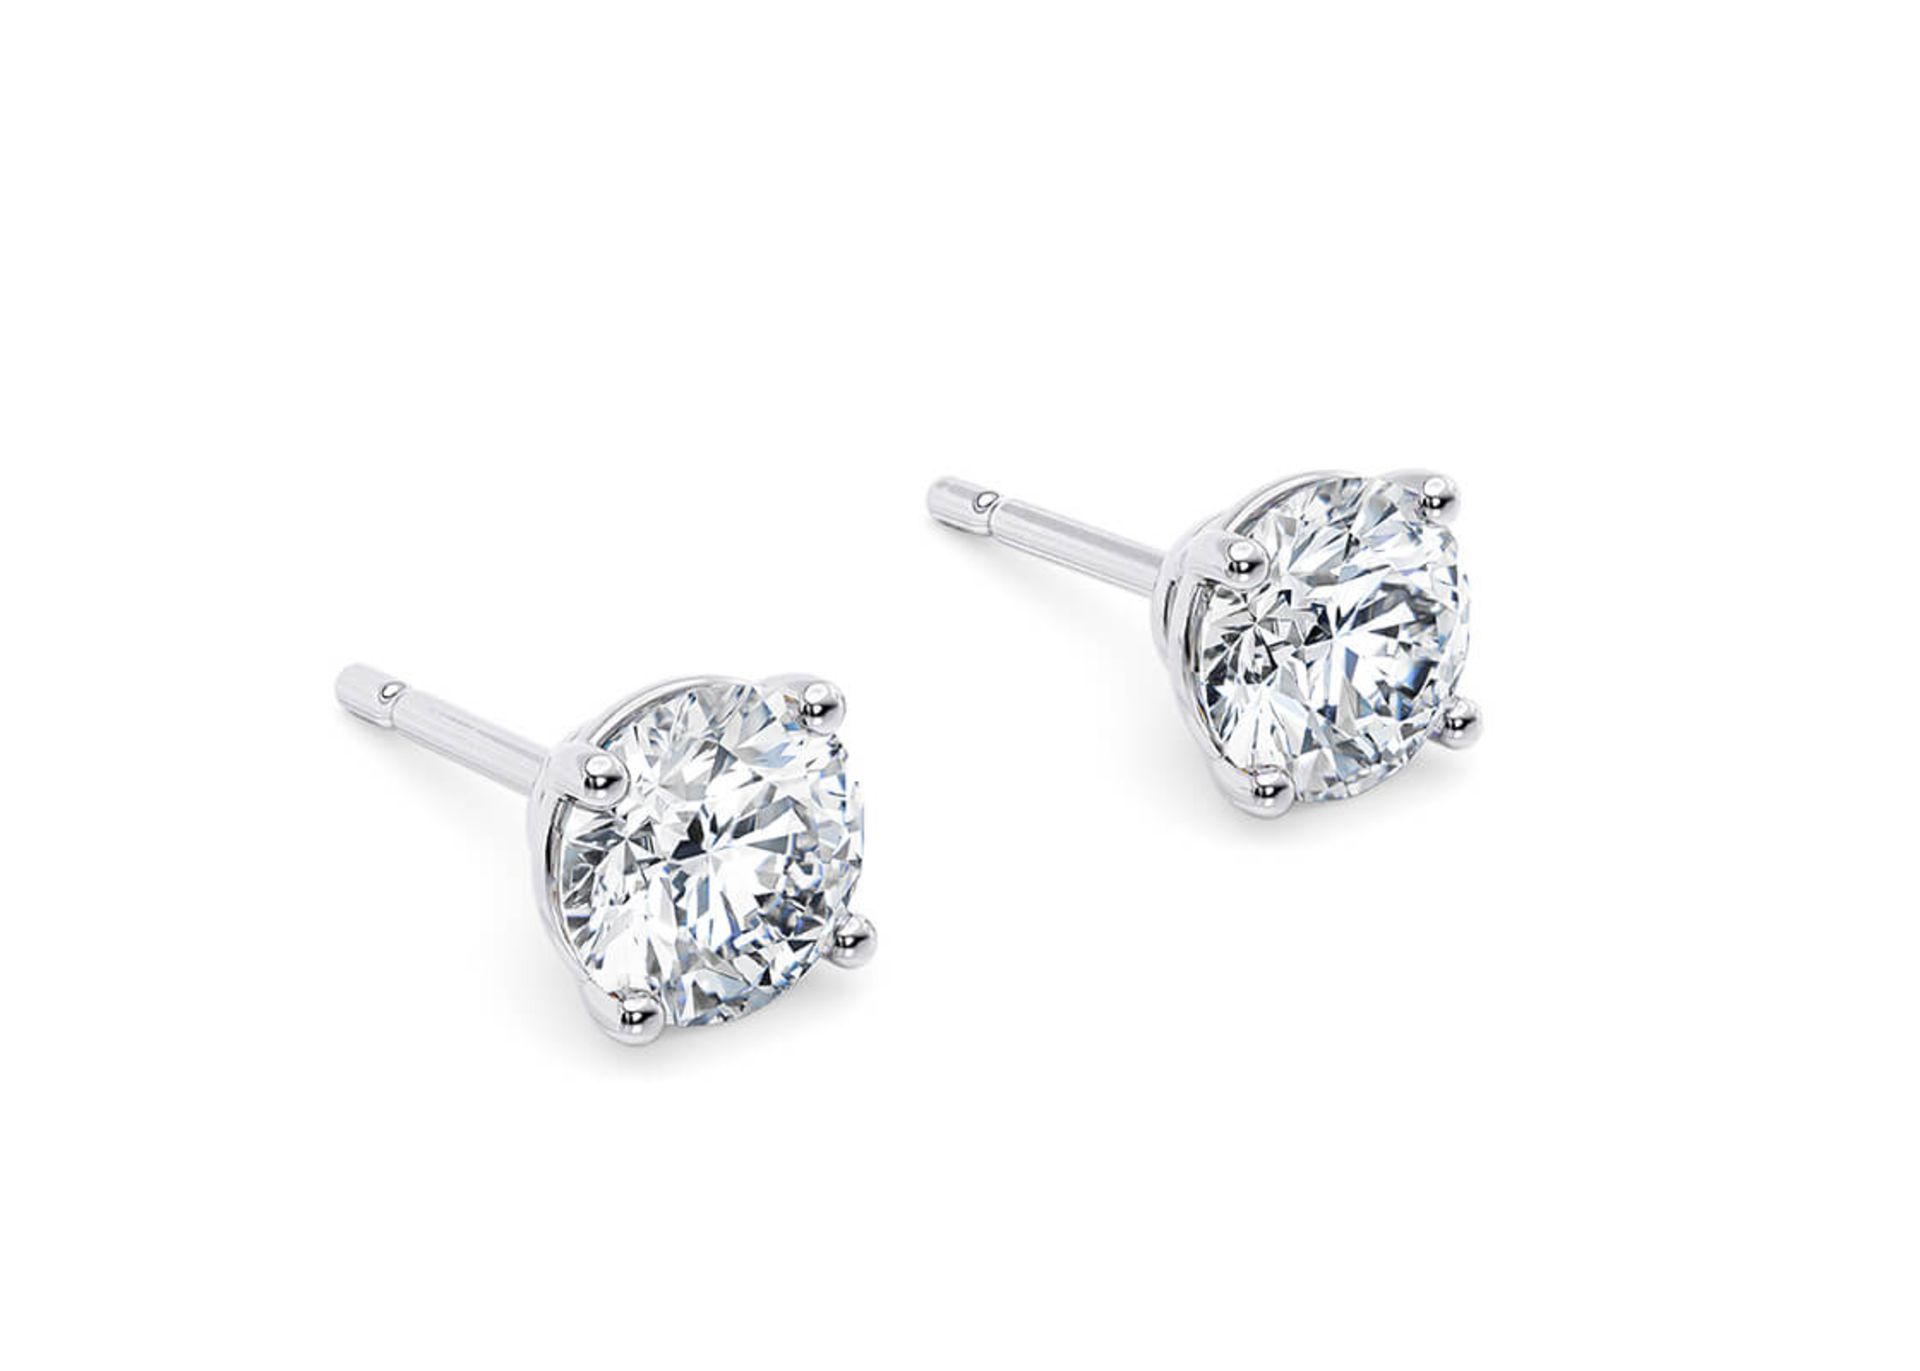 ** ON SALE ** Round Brilliant Cut 2.00 Carat Diamond Earrings Set in 18kt White Gold - E Colour VS - Image 2 of 3